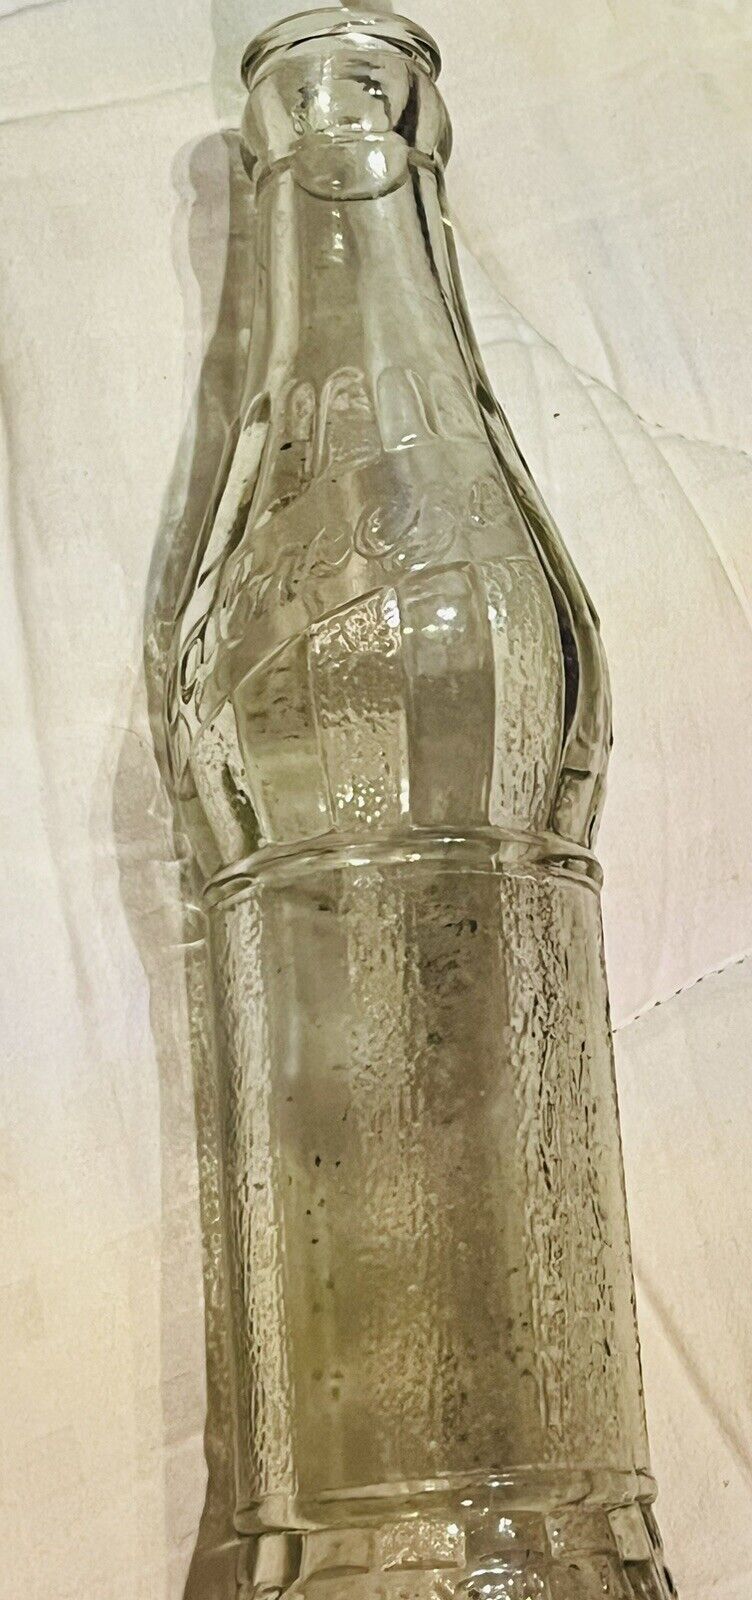 Rare Vintage Atlantic City, NJ Seabreeze Soda Bottle 1965 Great Condition Kitsch